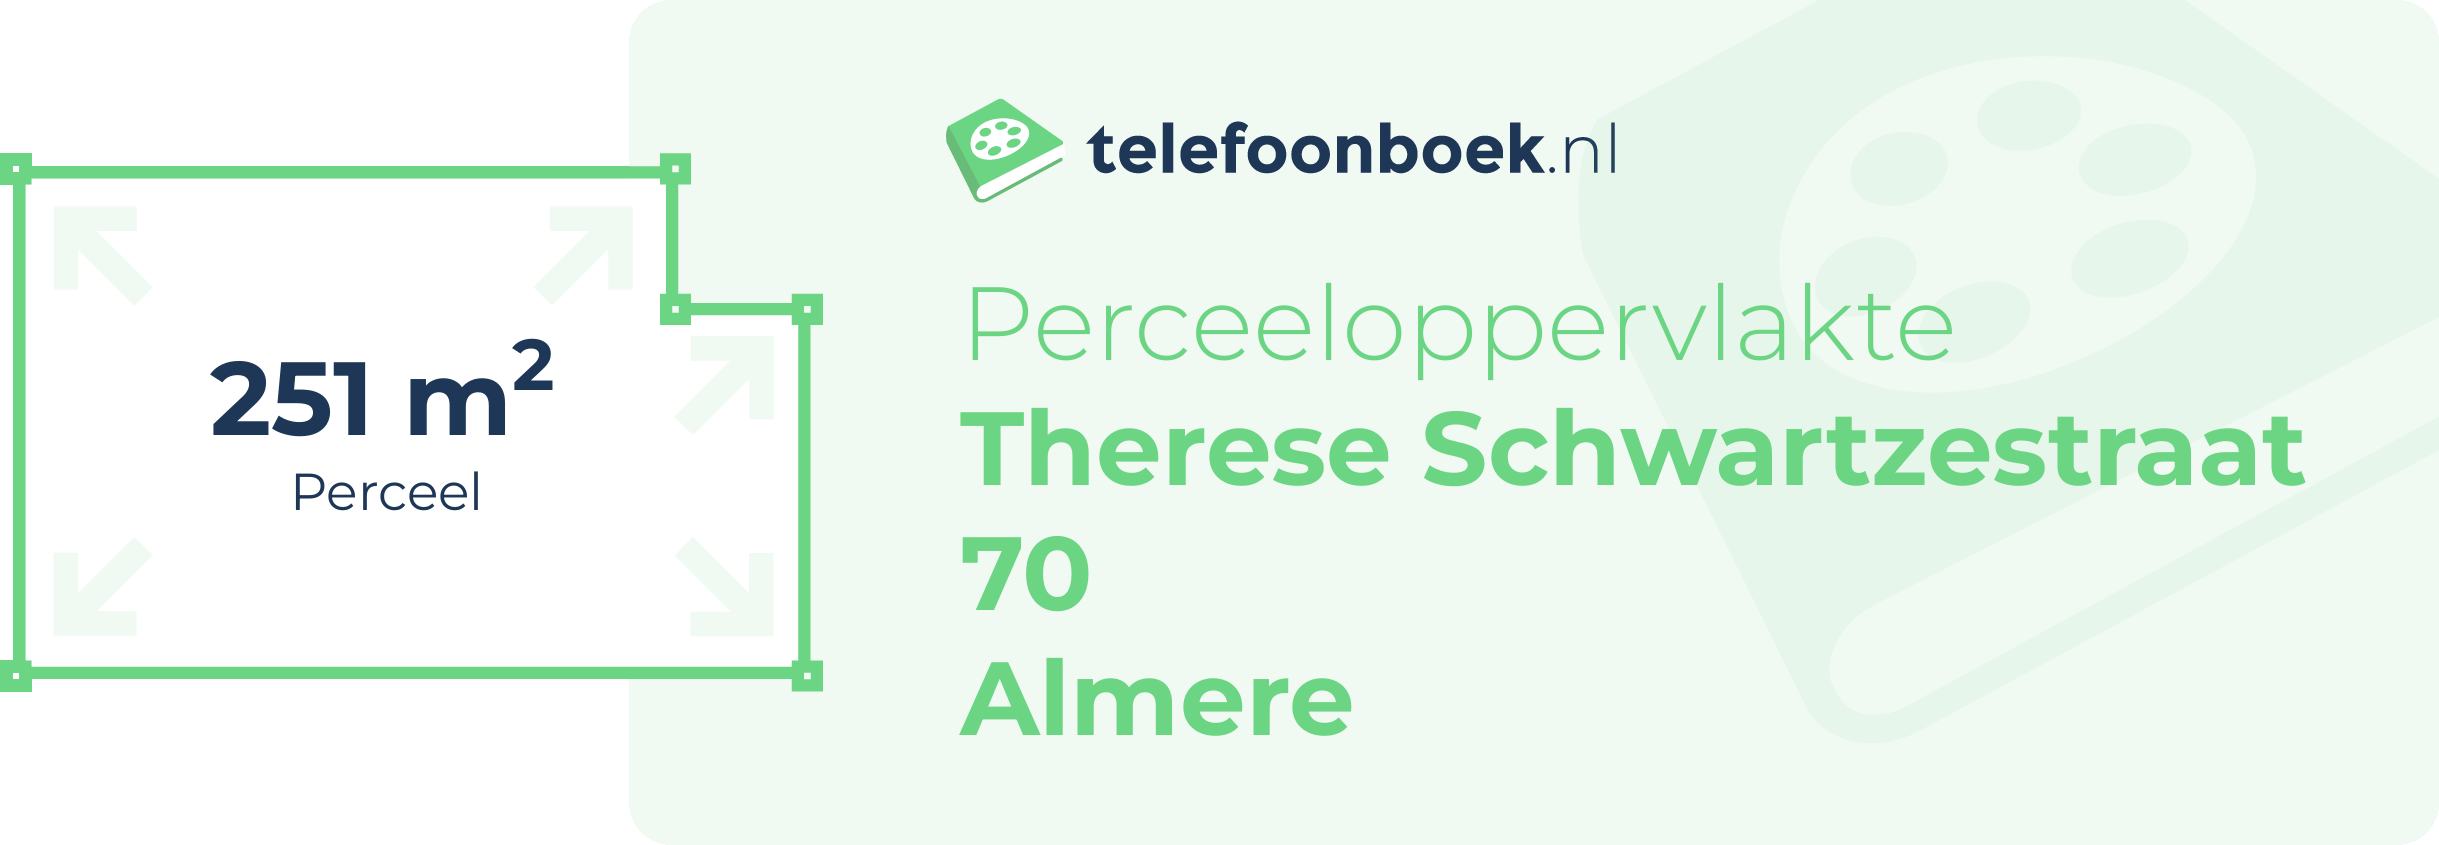 Perceeloppervlakte Therese Schwartzestraat 70 Almere